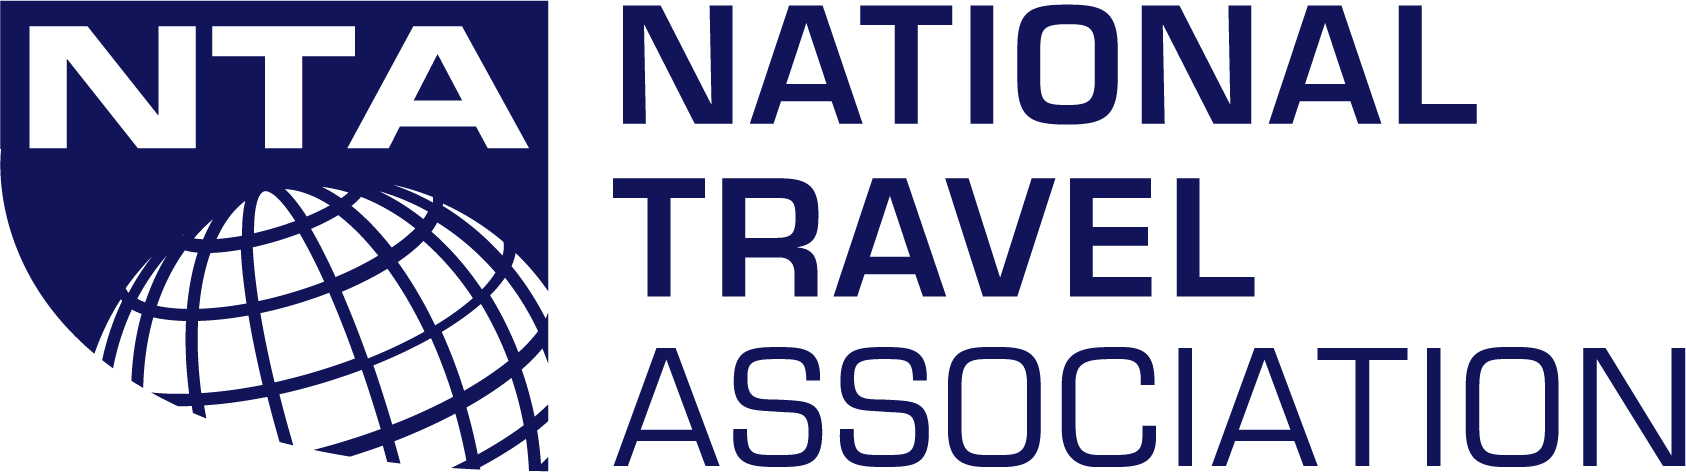 National Travel Association